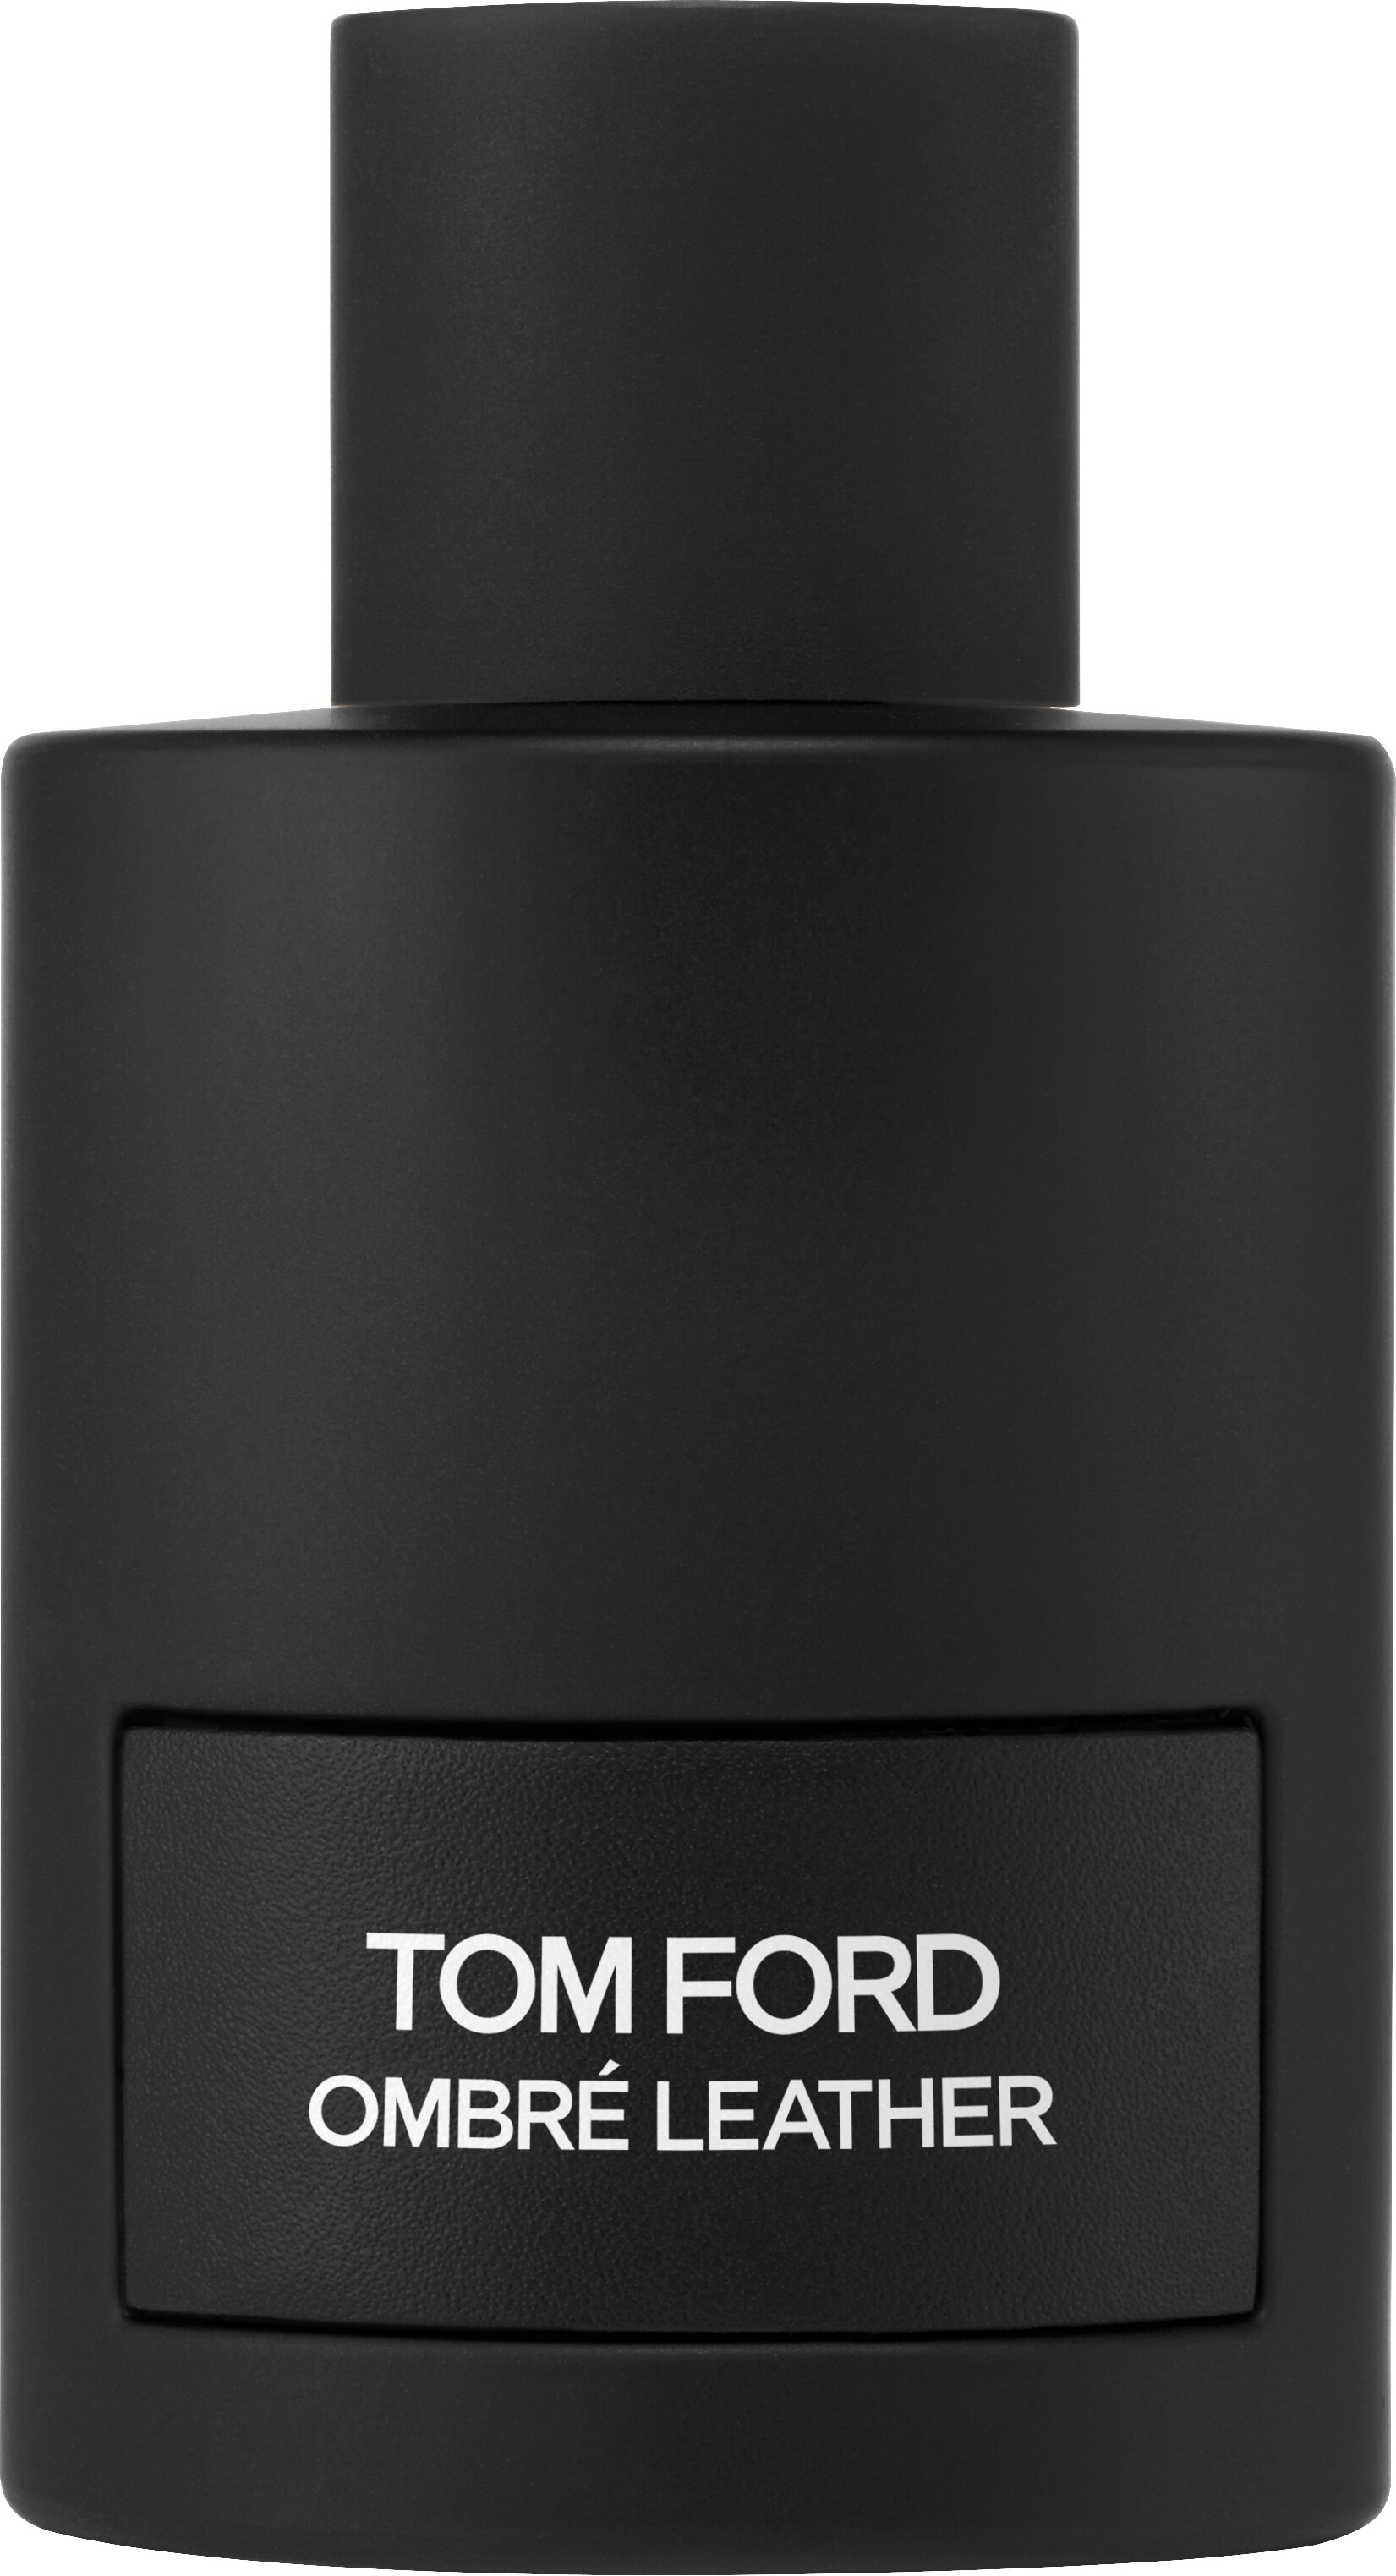 Tom Ford Ombre Leather Eau de Parfum Spray 150ml